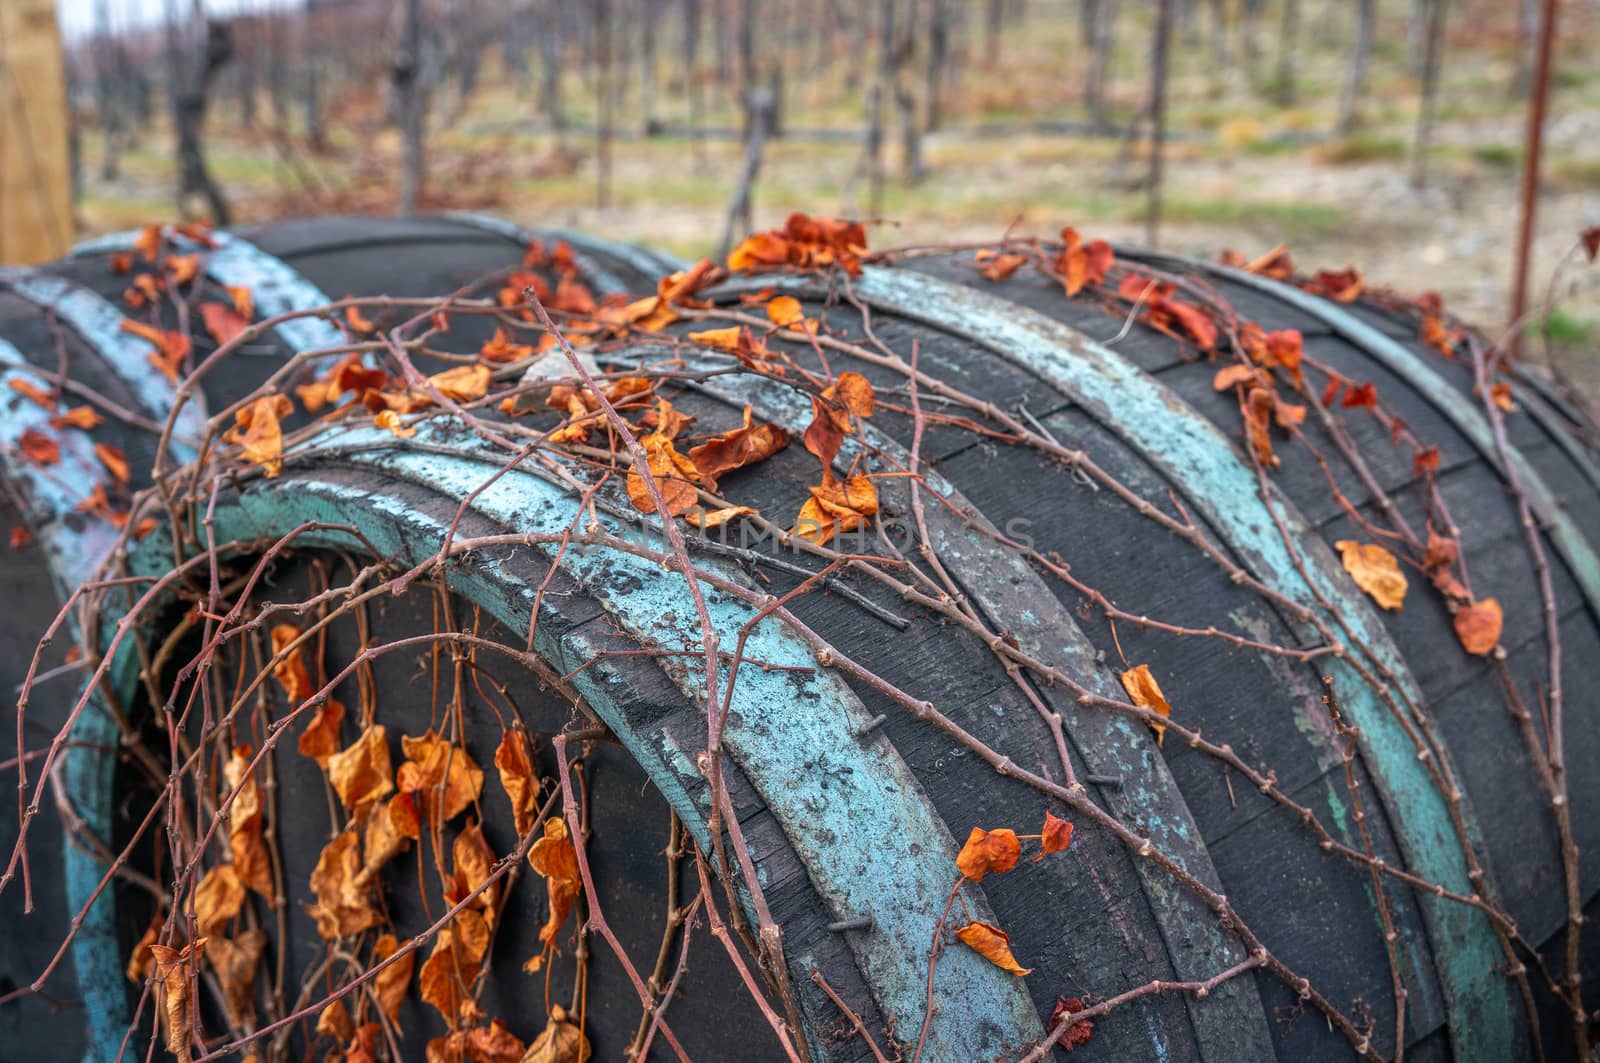 Macro photo of vibrant orange dry leaves growing on vines over barrels by sara_lissaker